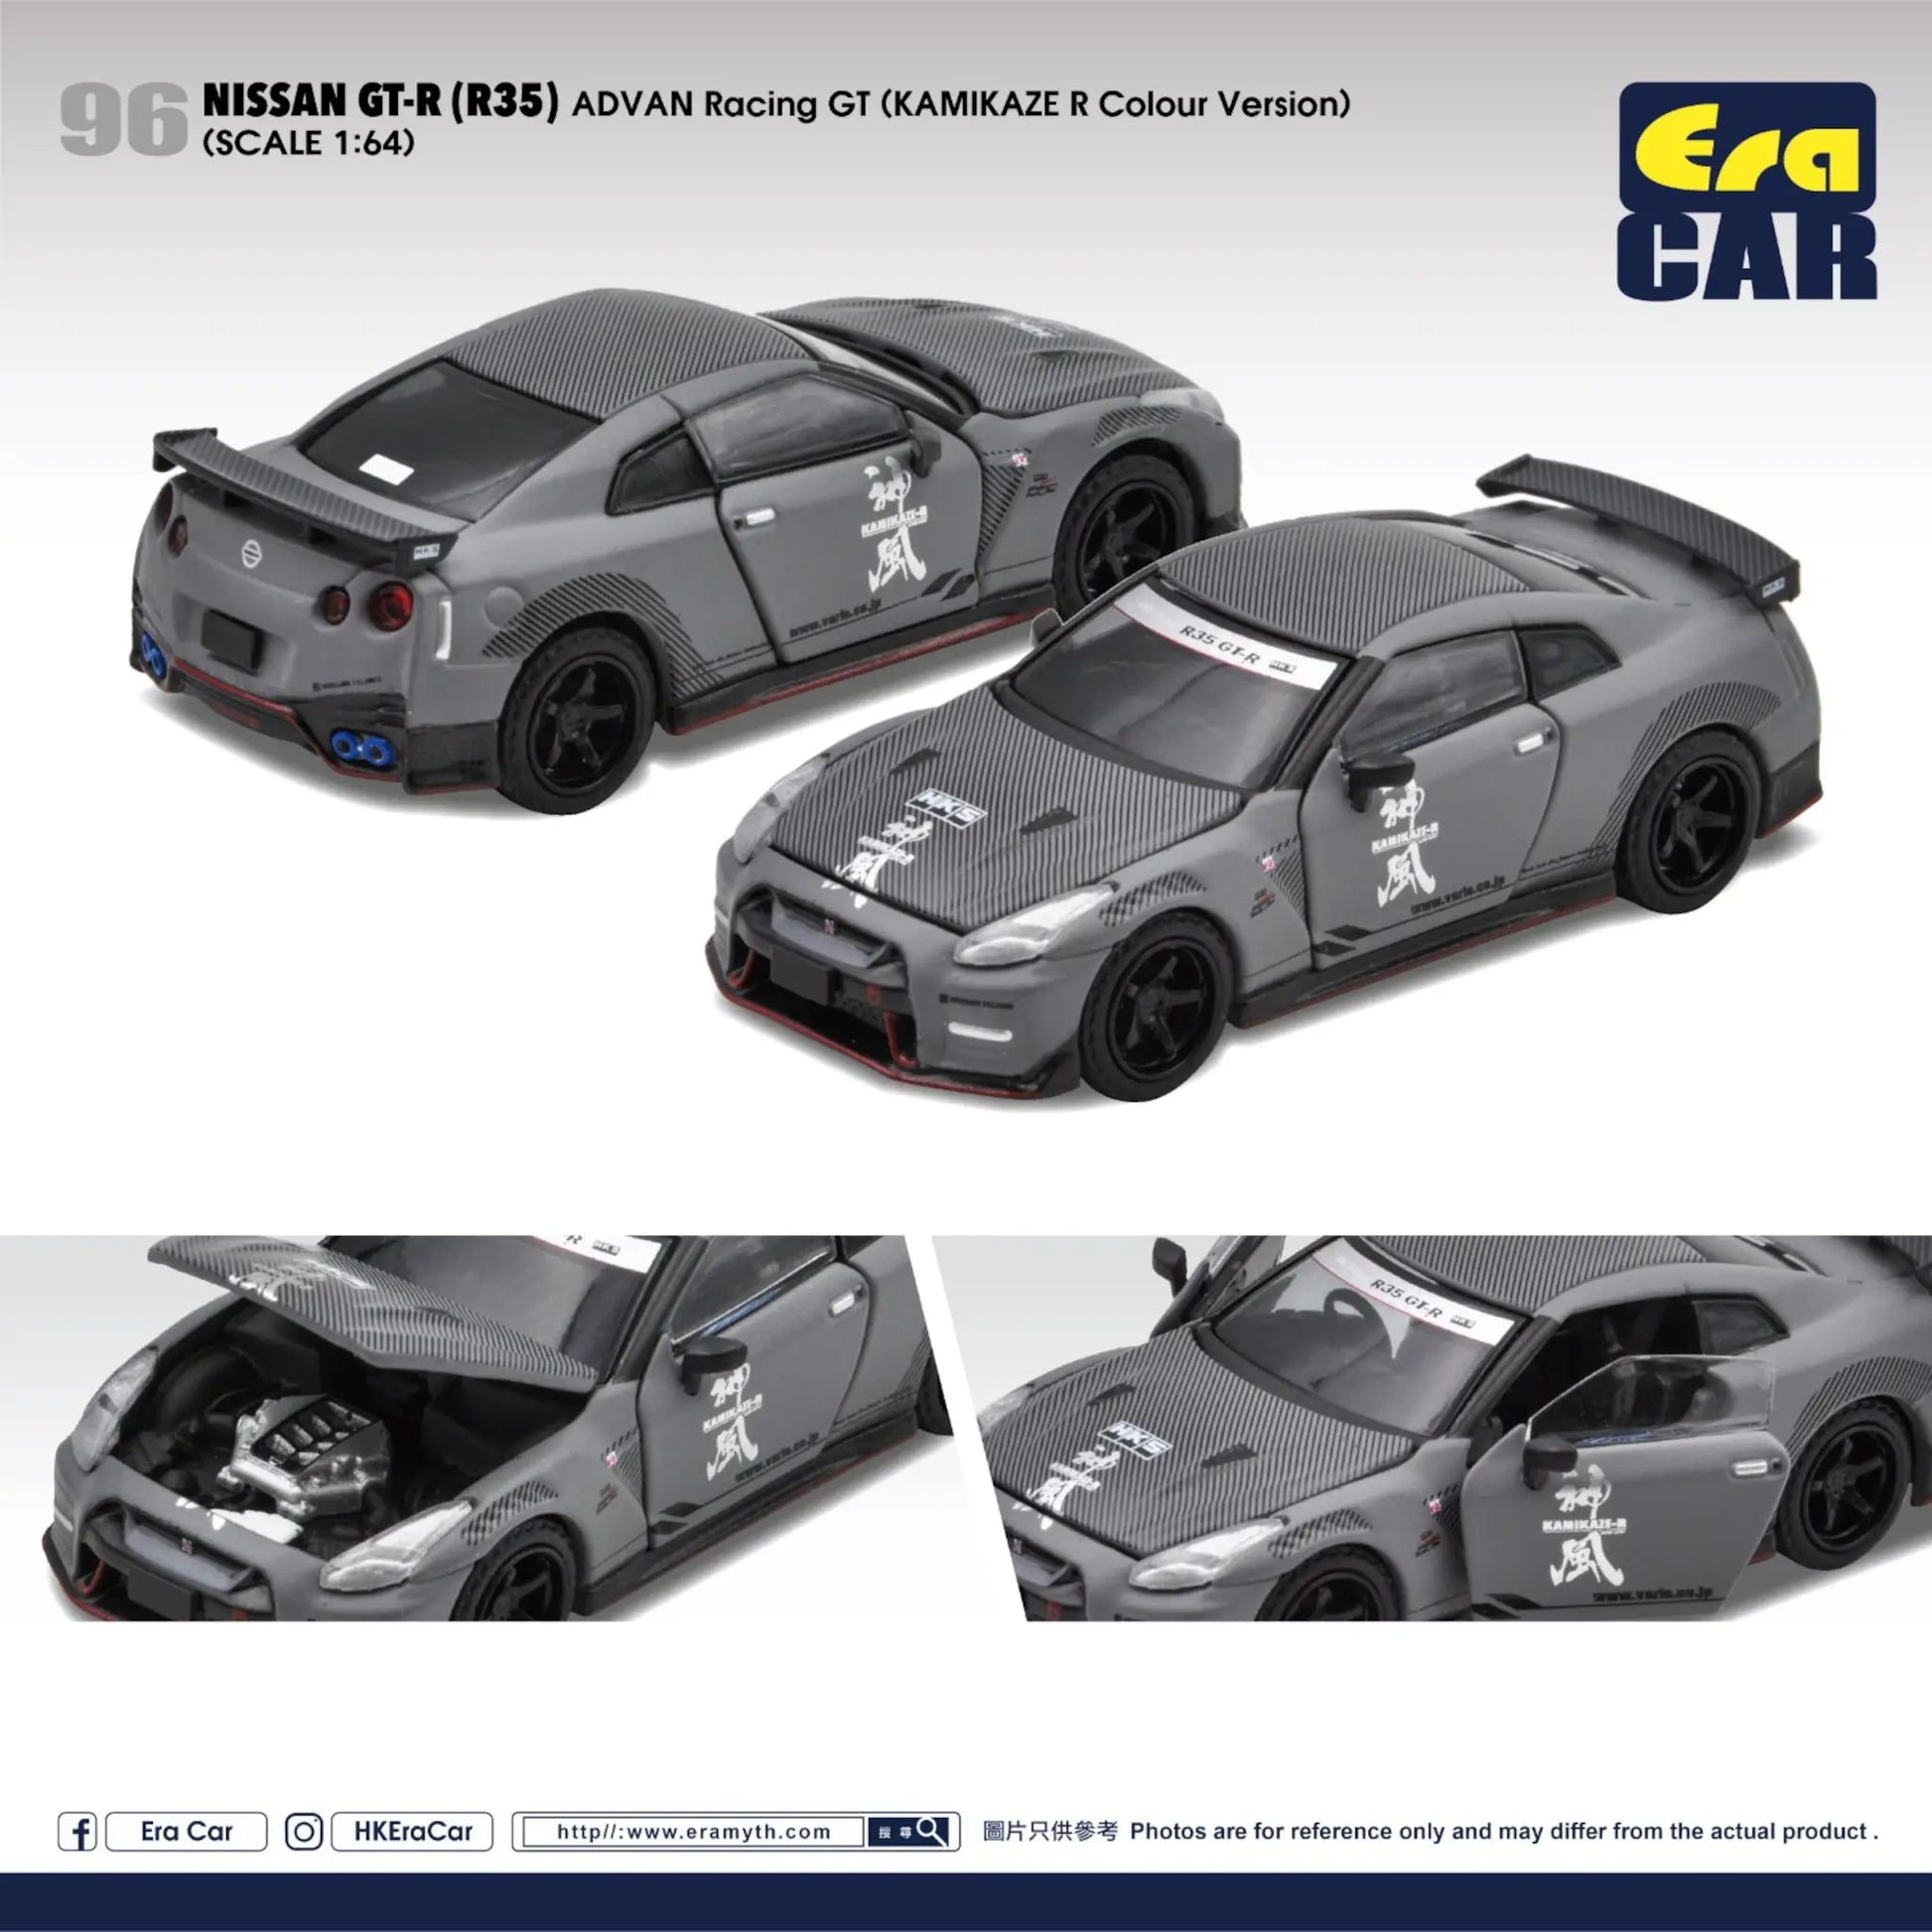 Nissan GT-R R35 ADVAN Racing GT 2020 Kamikaze R Colour Era Car 1/64 | Motors Miniatures